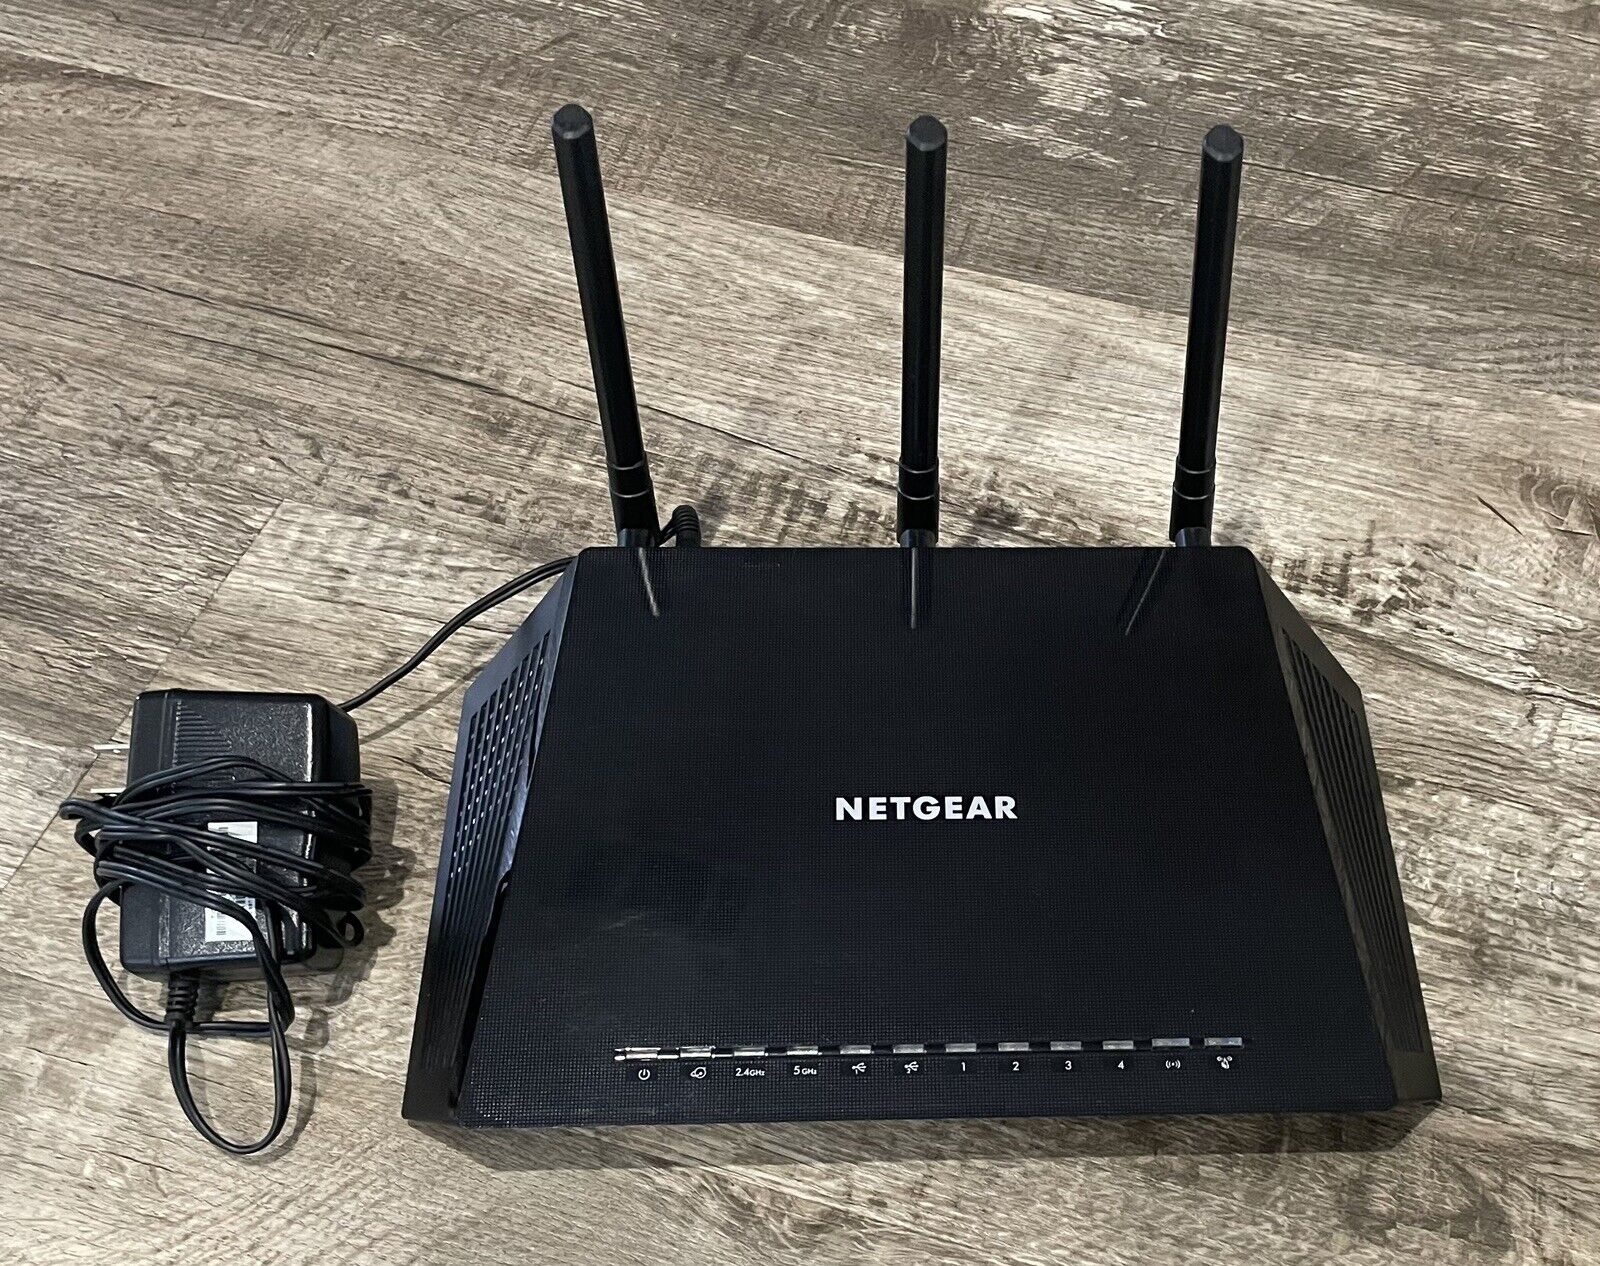 NETGEAR AC1750 Model 6400 Smart WiFi Router Model: R6400v2 PREOWNED WORKS GREAT